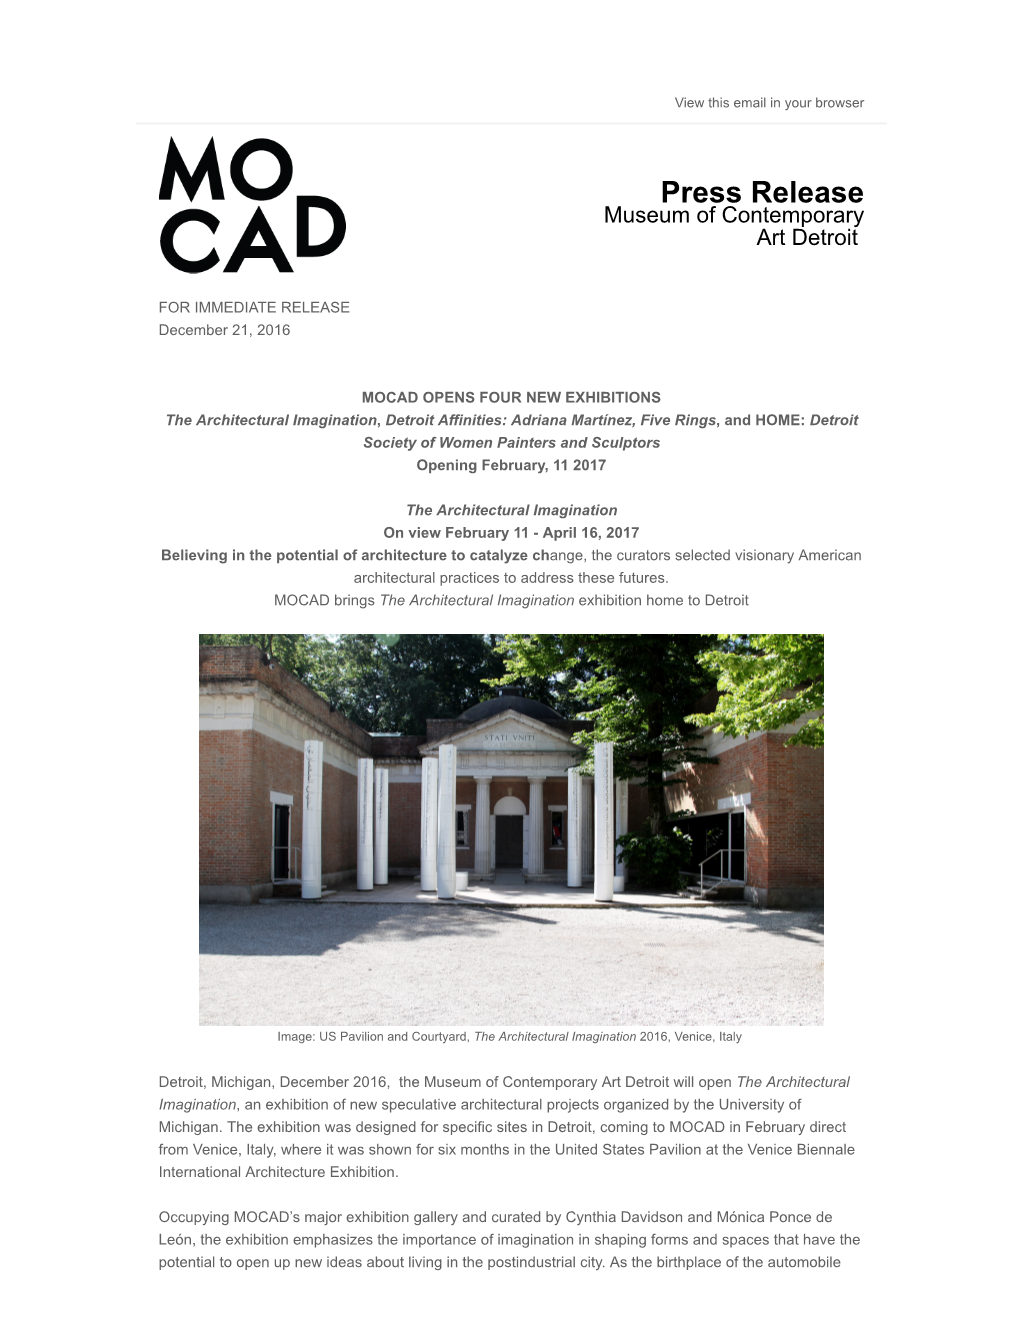 Press Release Museum of Contemporary Art Detroit